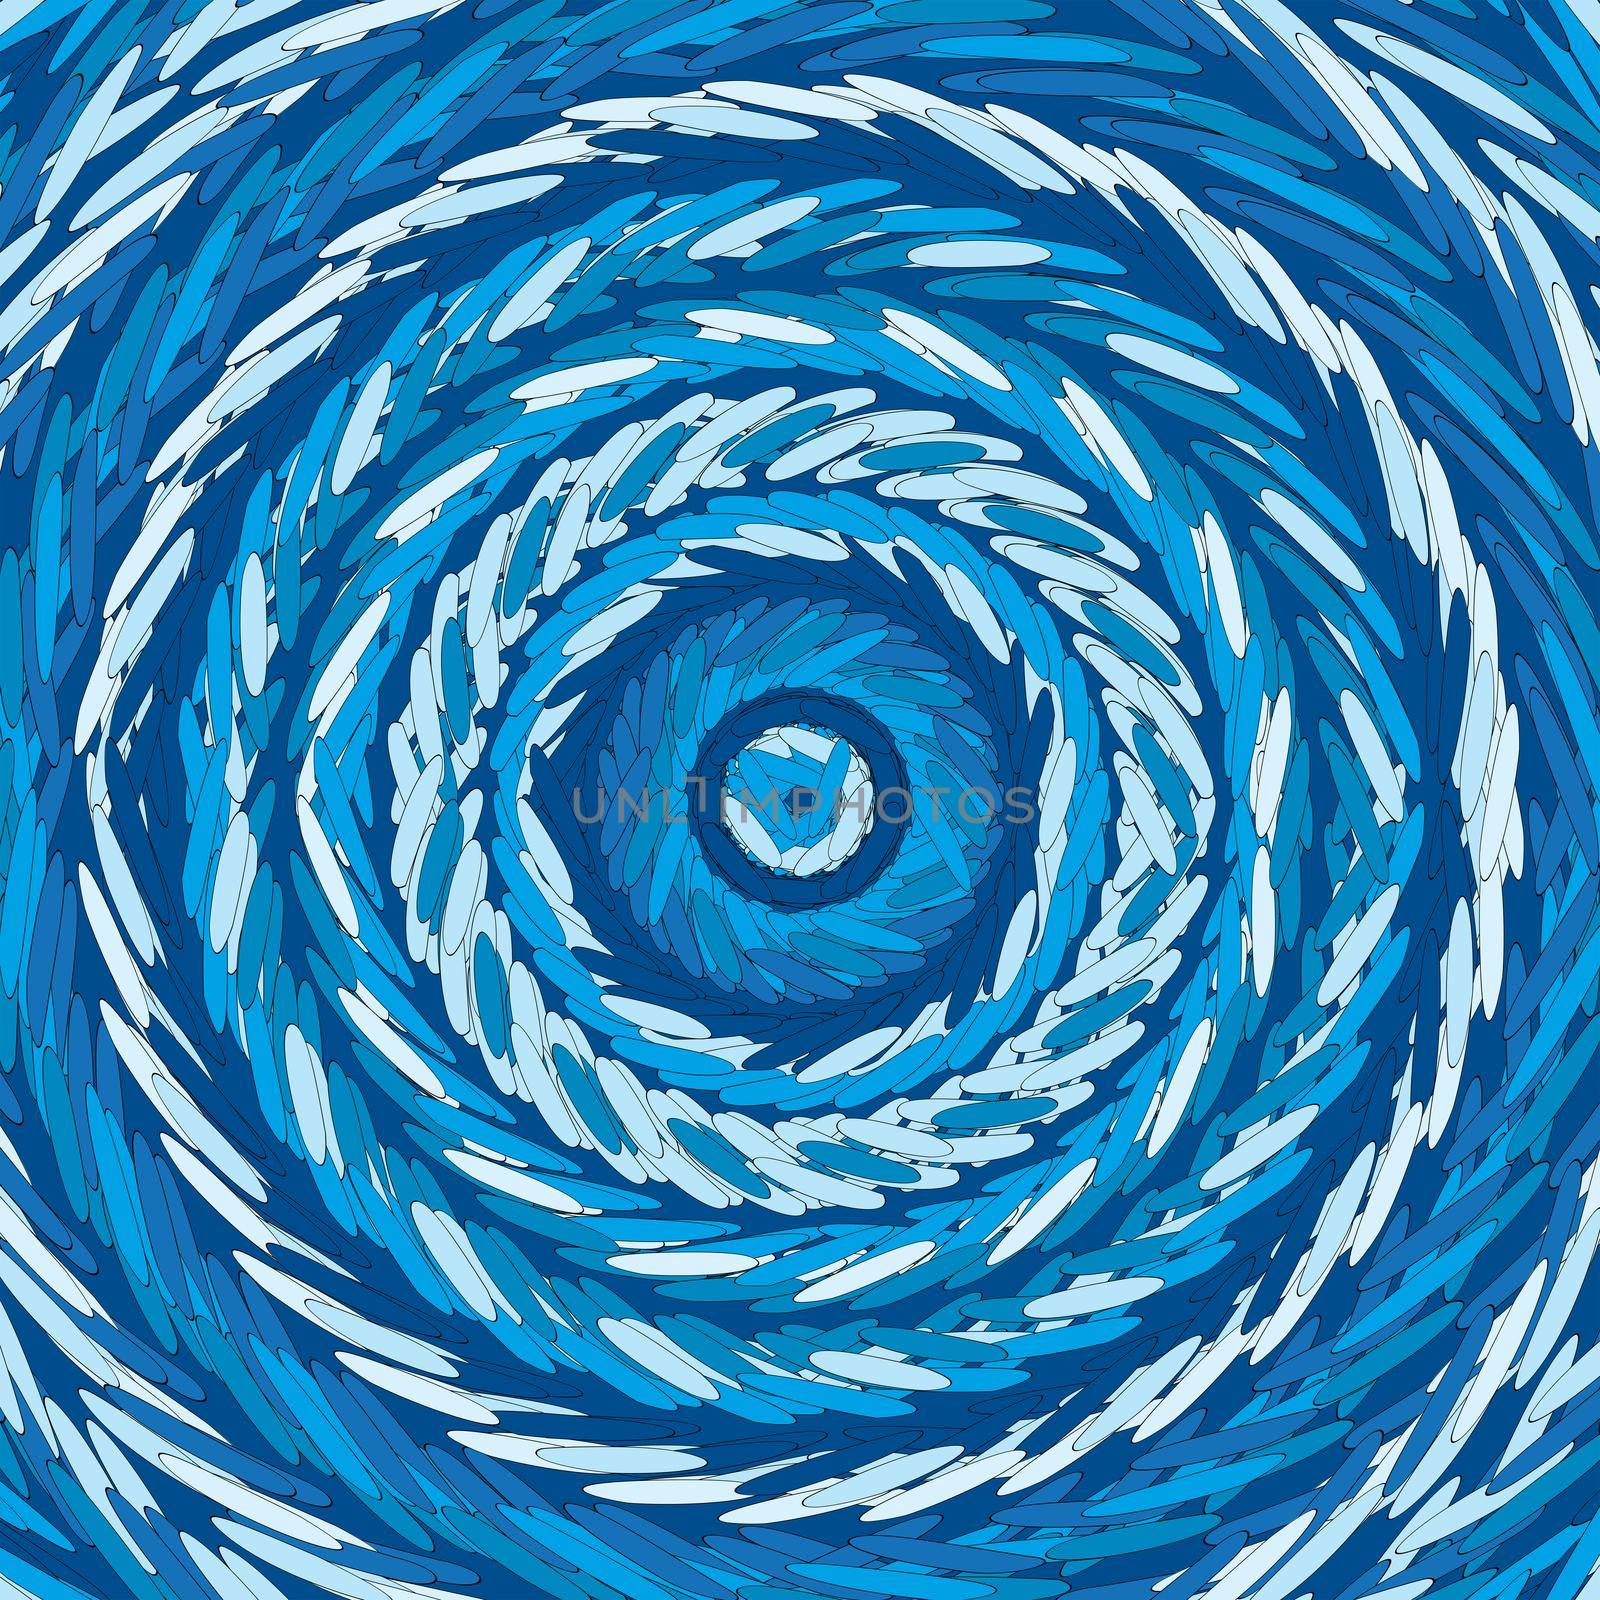 Circular design with blue stick lines